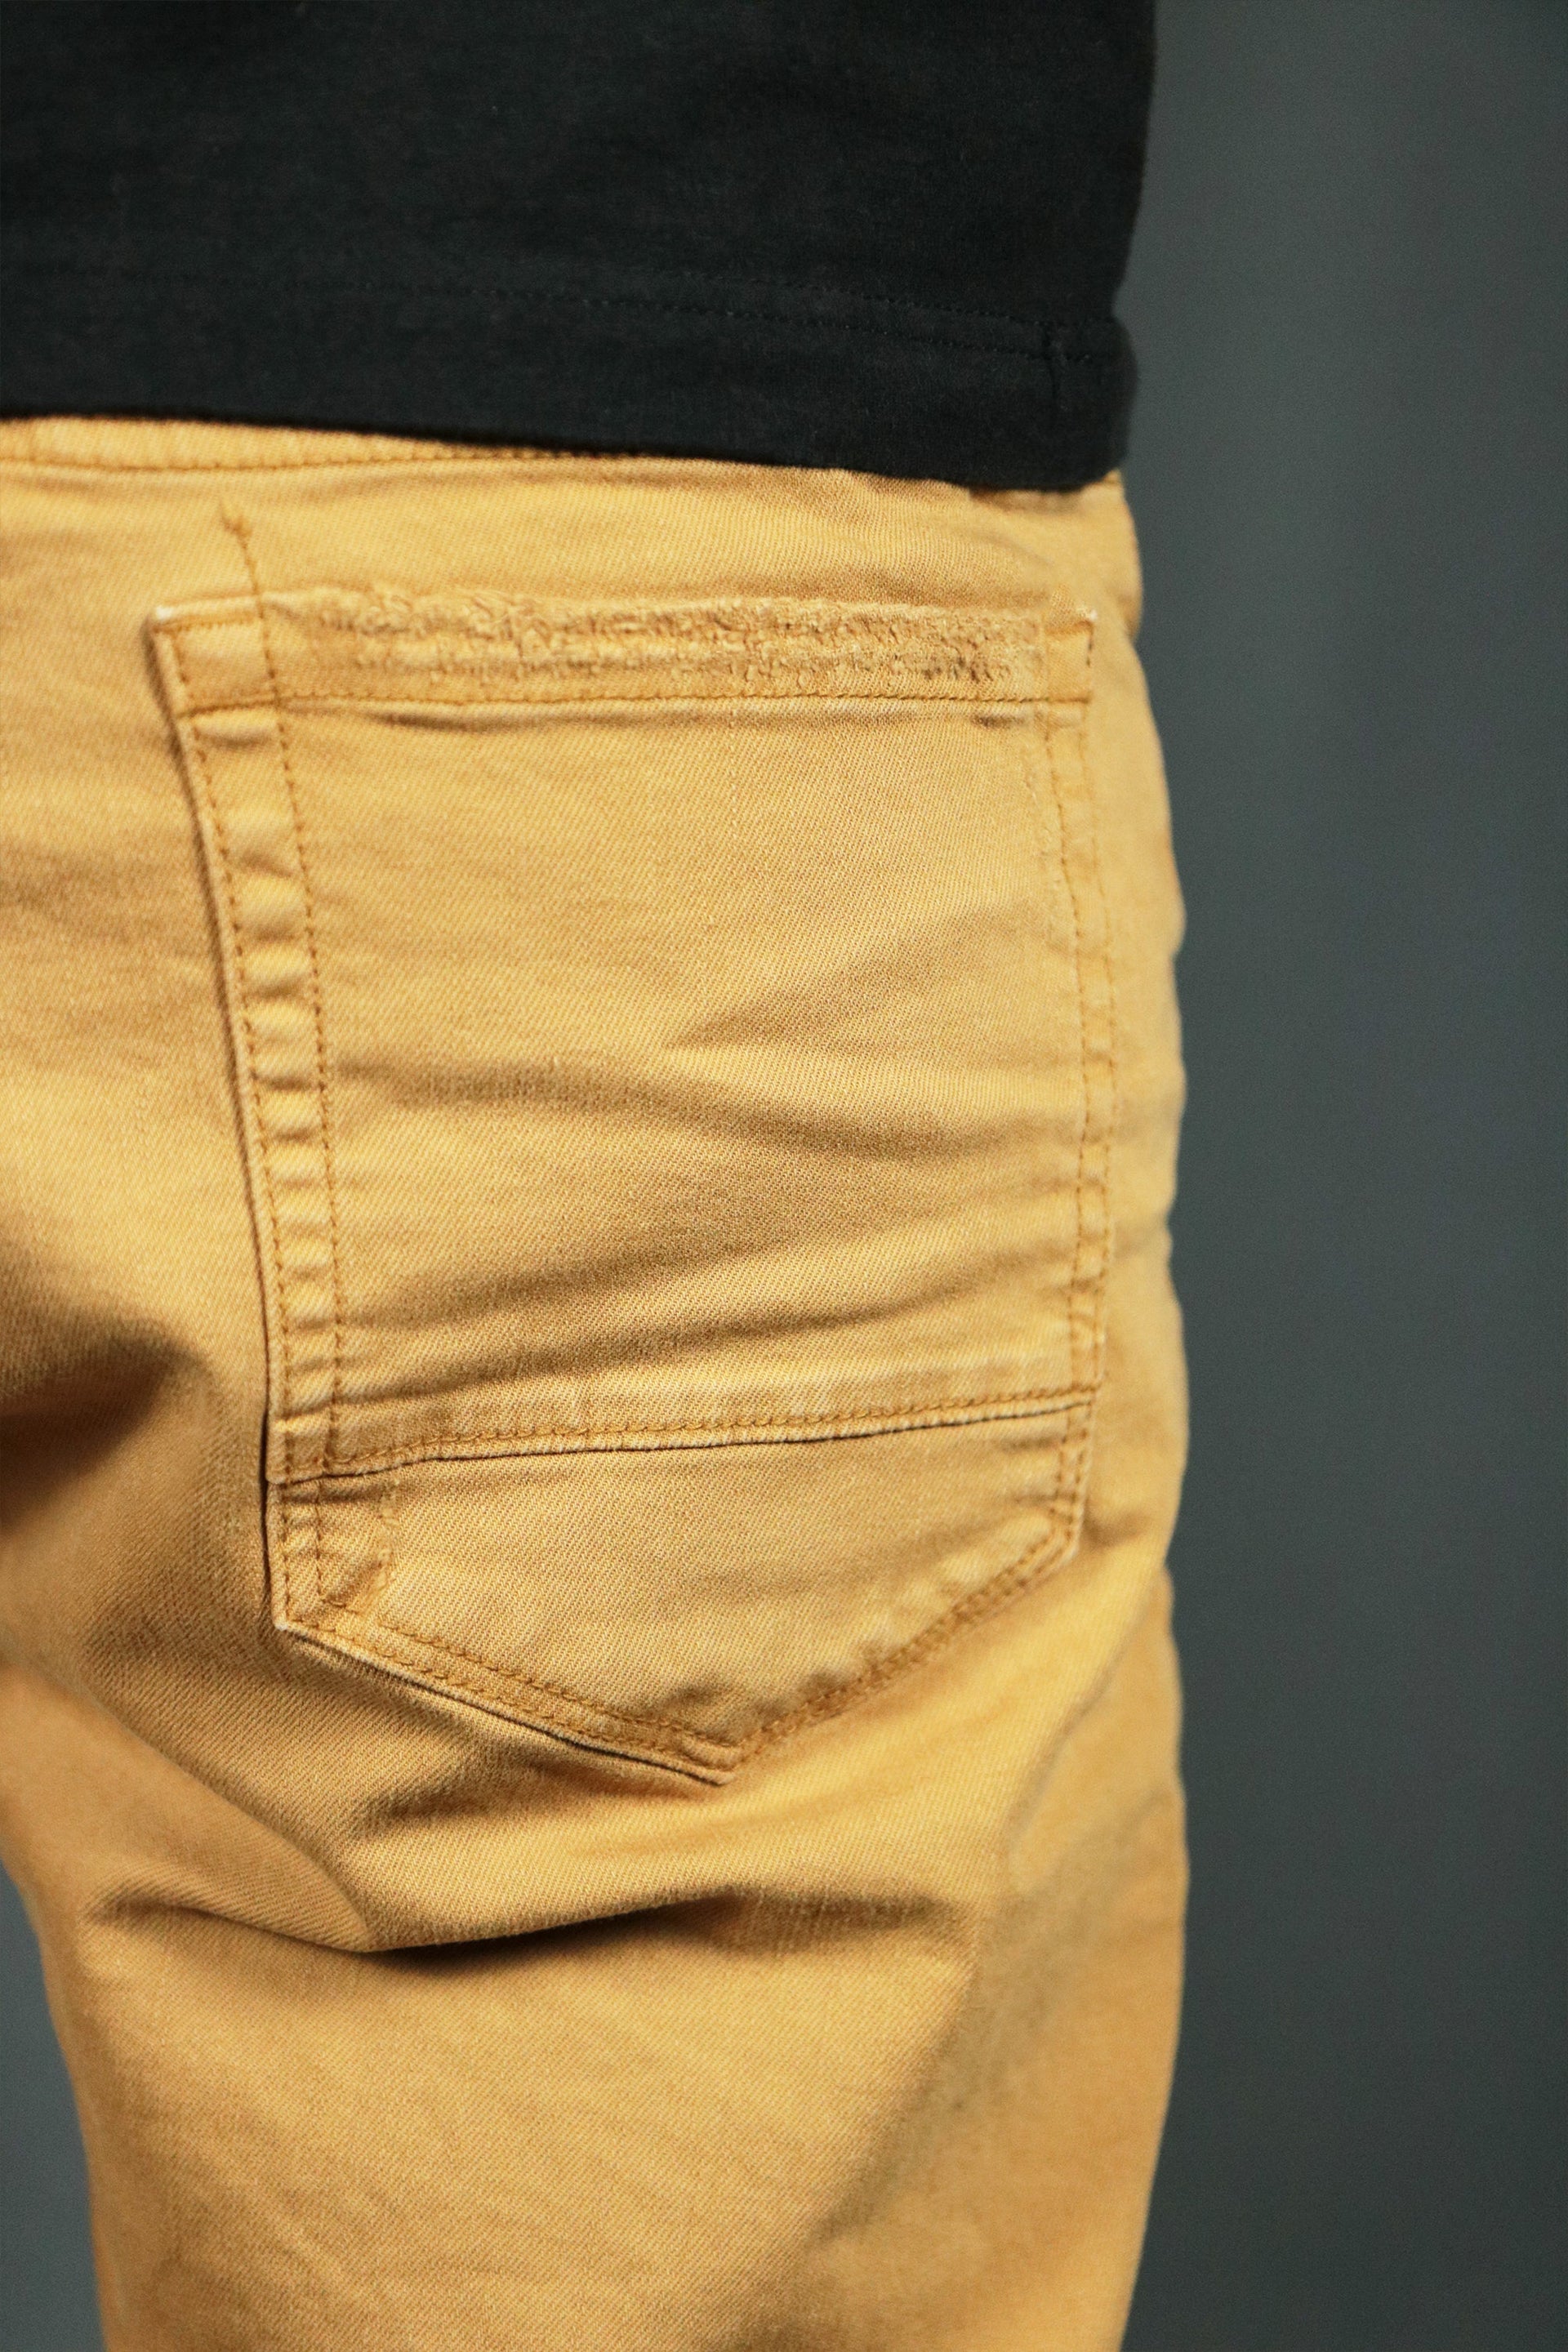 The back pocket of these khaki ripped men shorts.